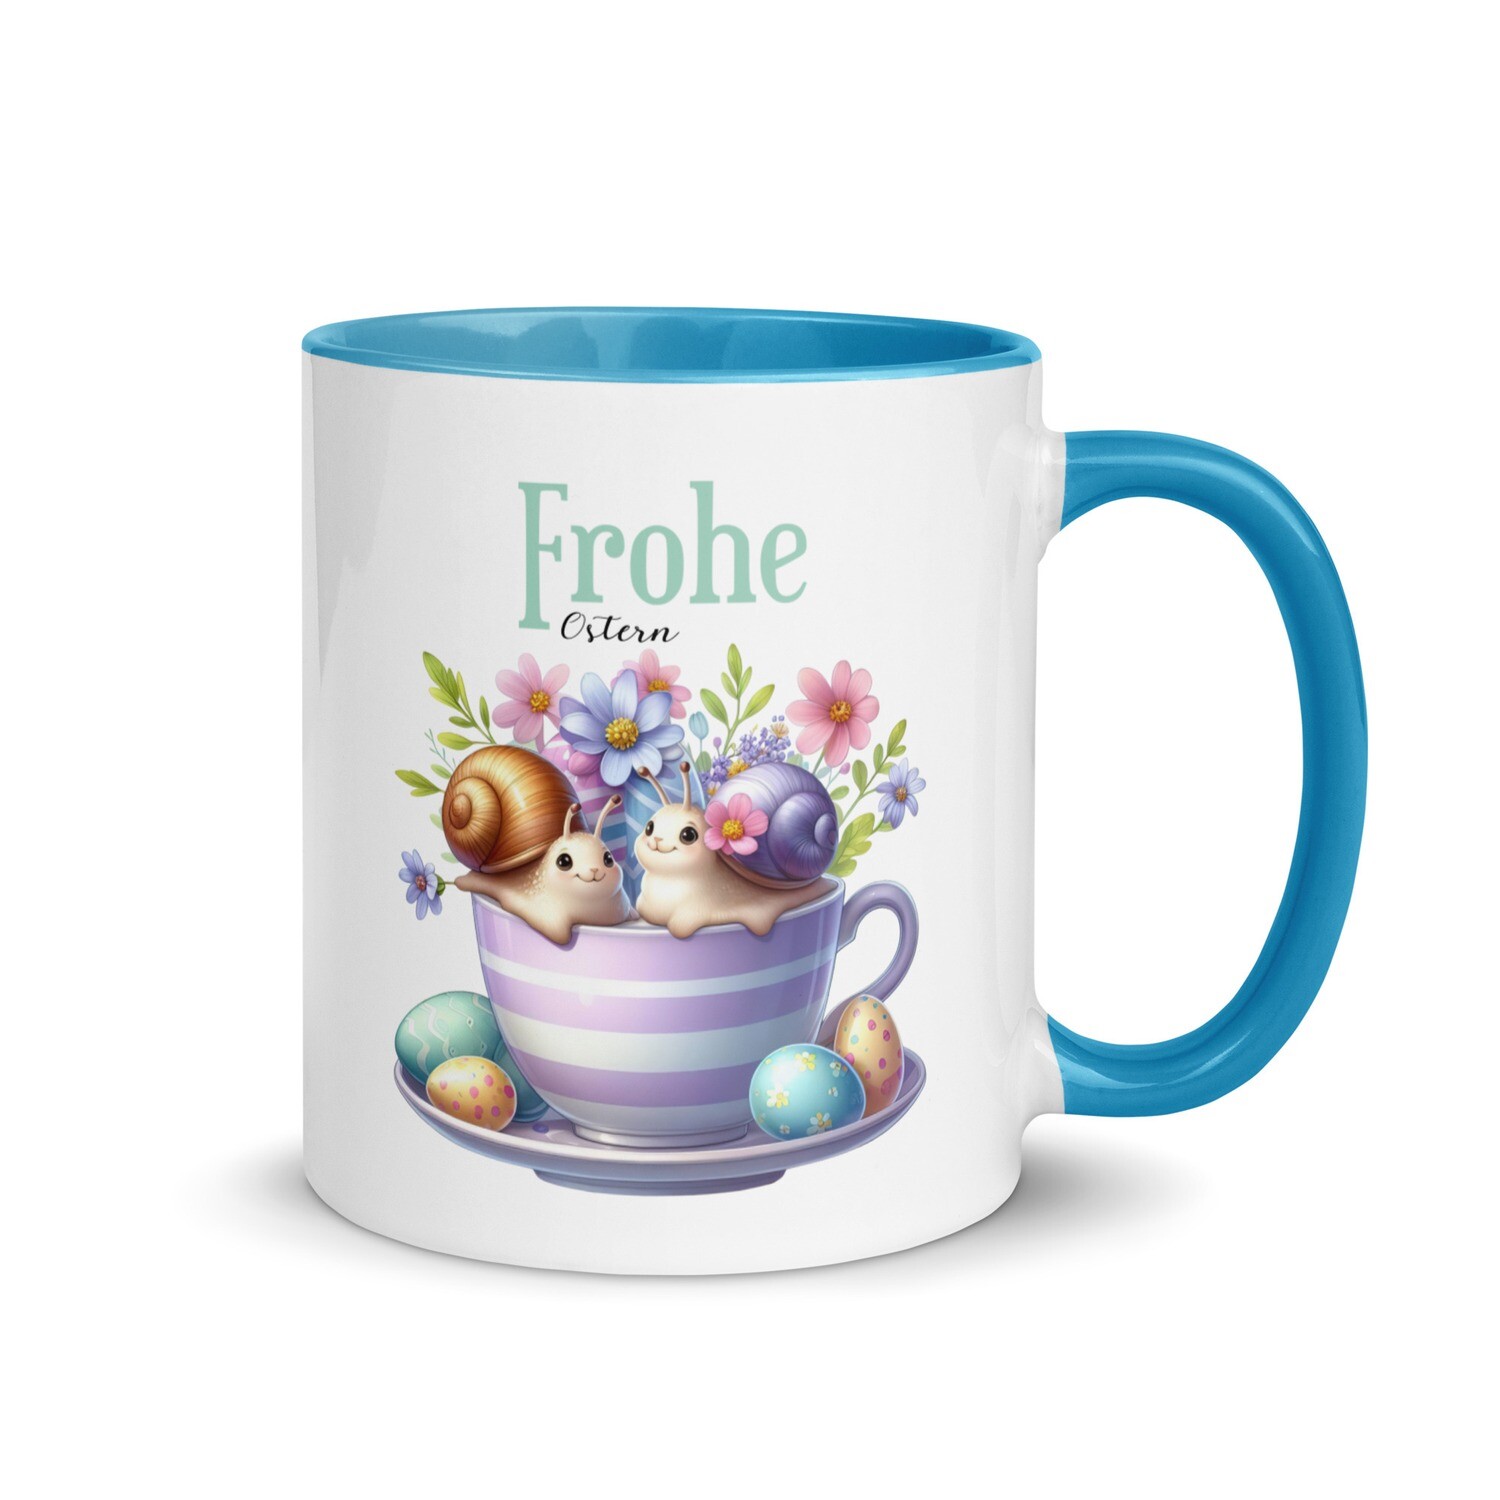 Farbige Keramik Tasse Schnecke &quot;Frohe Ostern&quot;